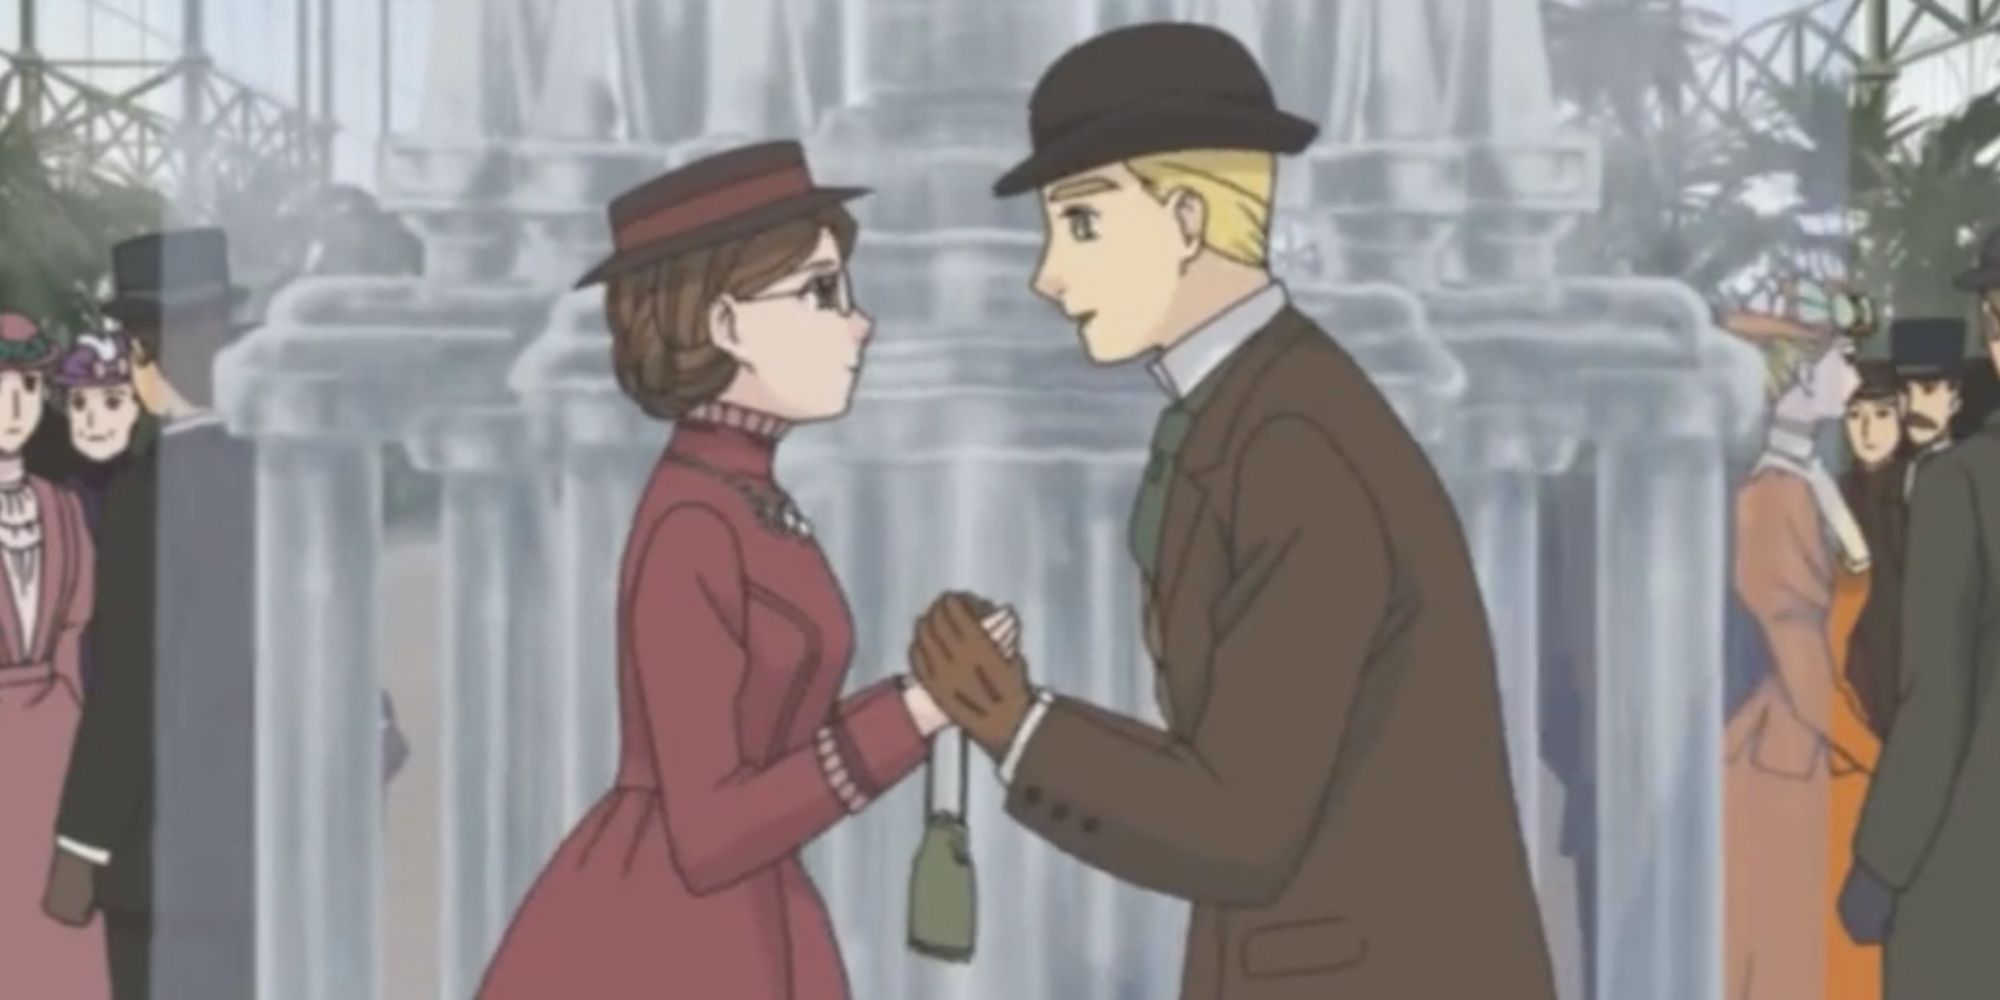 Emma, A Victorian Romance